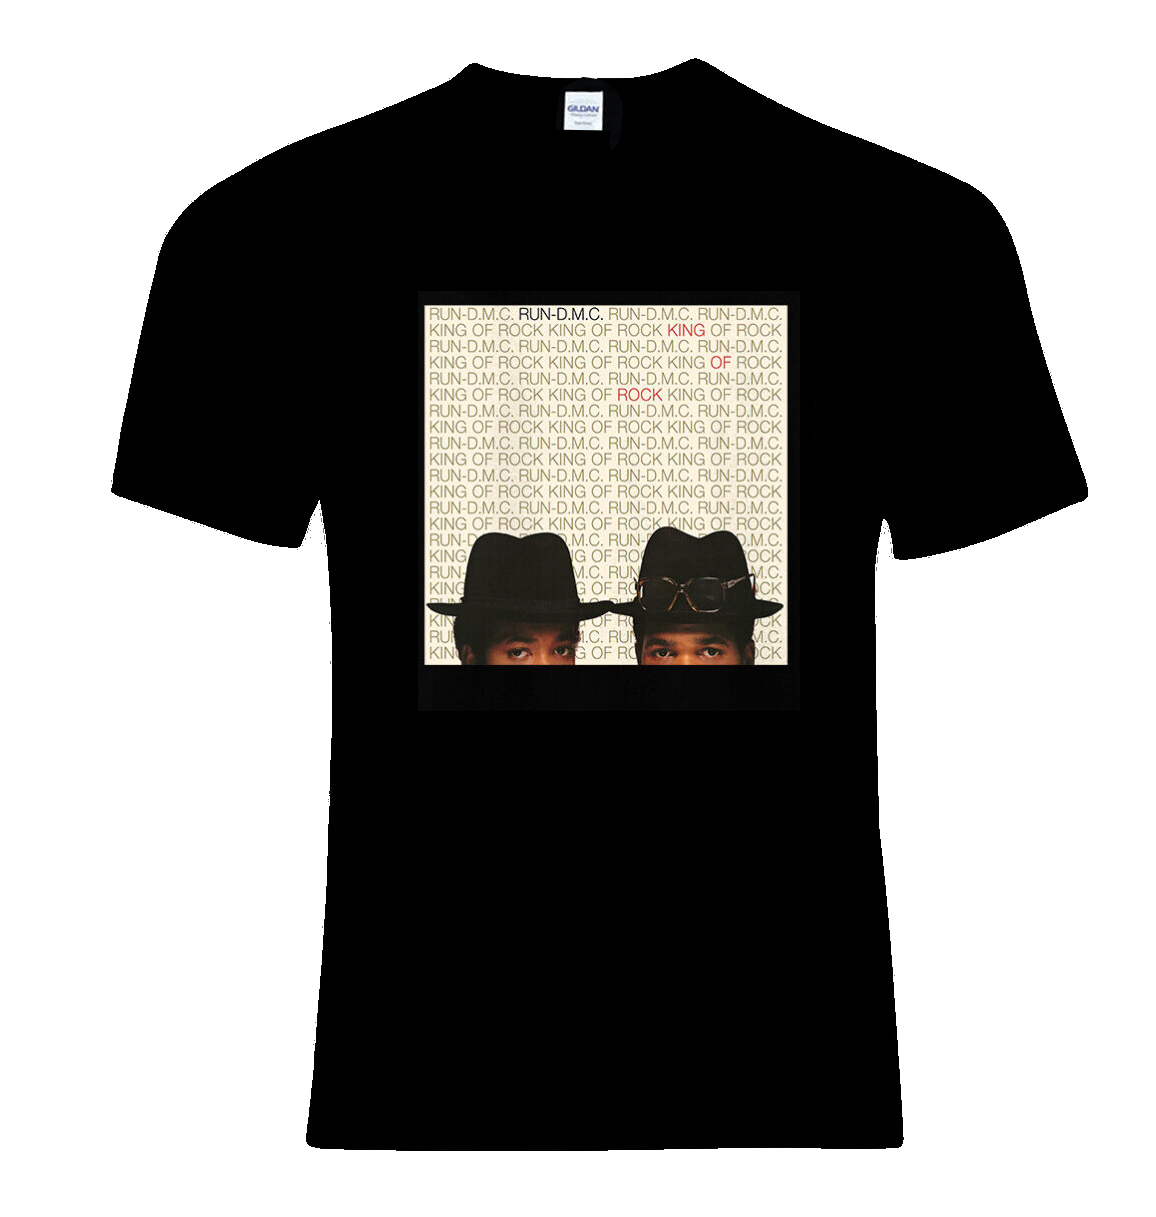 RUN DMC KING OF ROCK 1985 Black T-shirt - $19.99 - $25.99